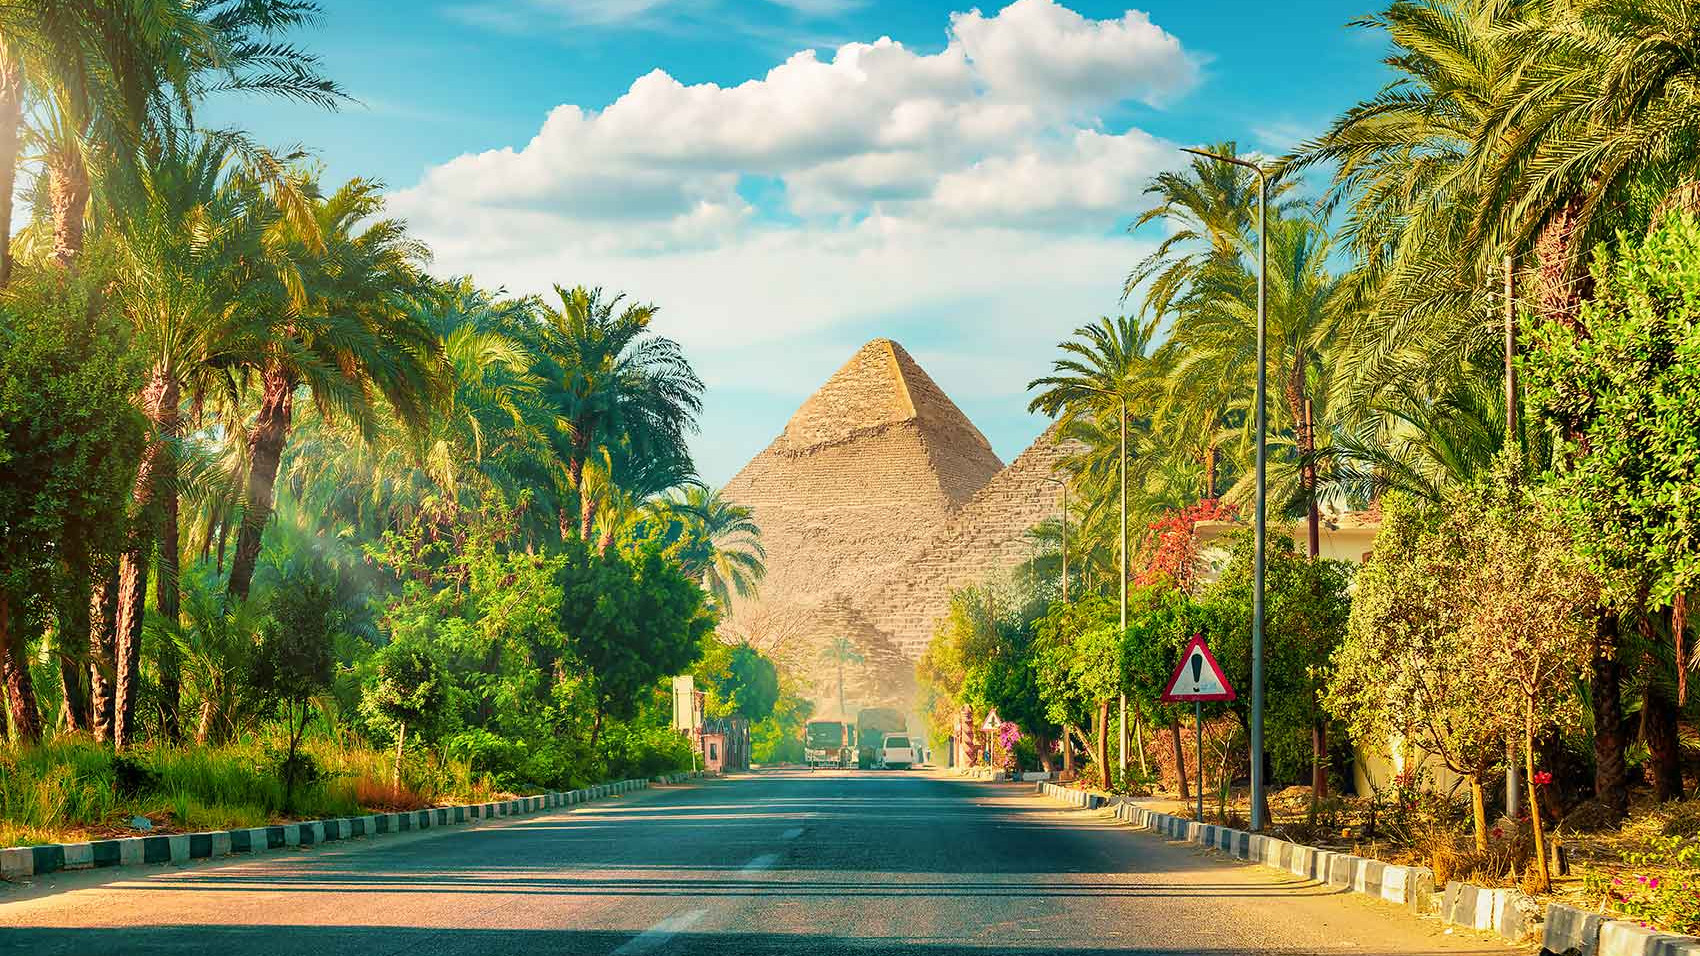 How to get around Egypt